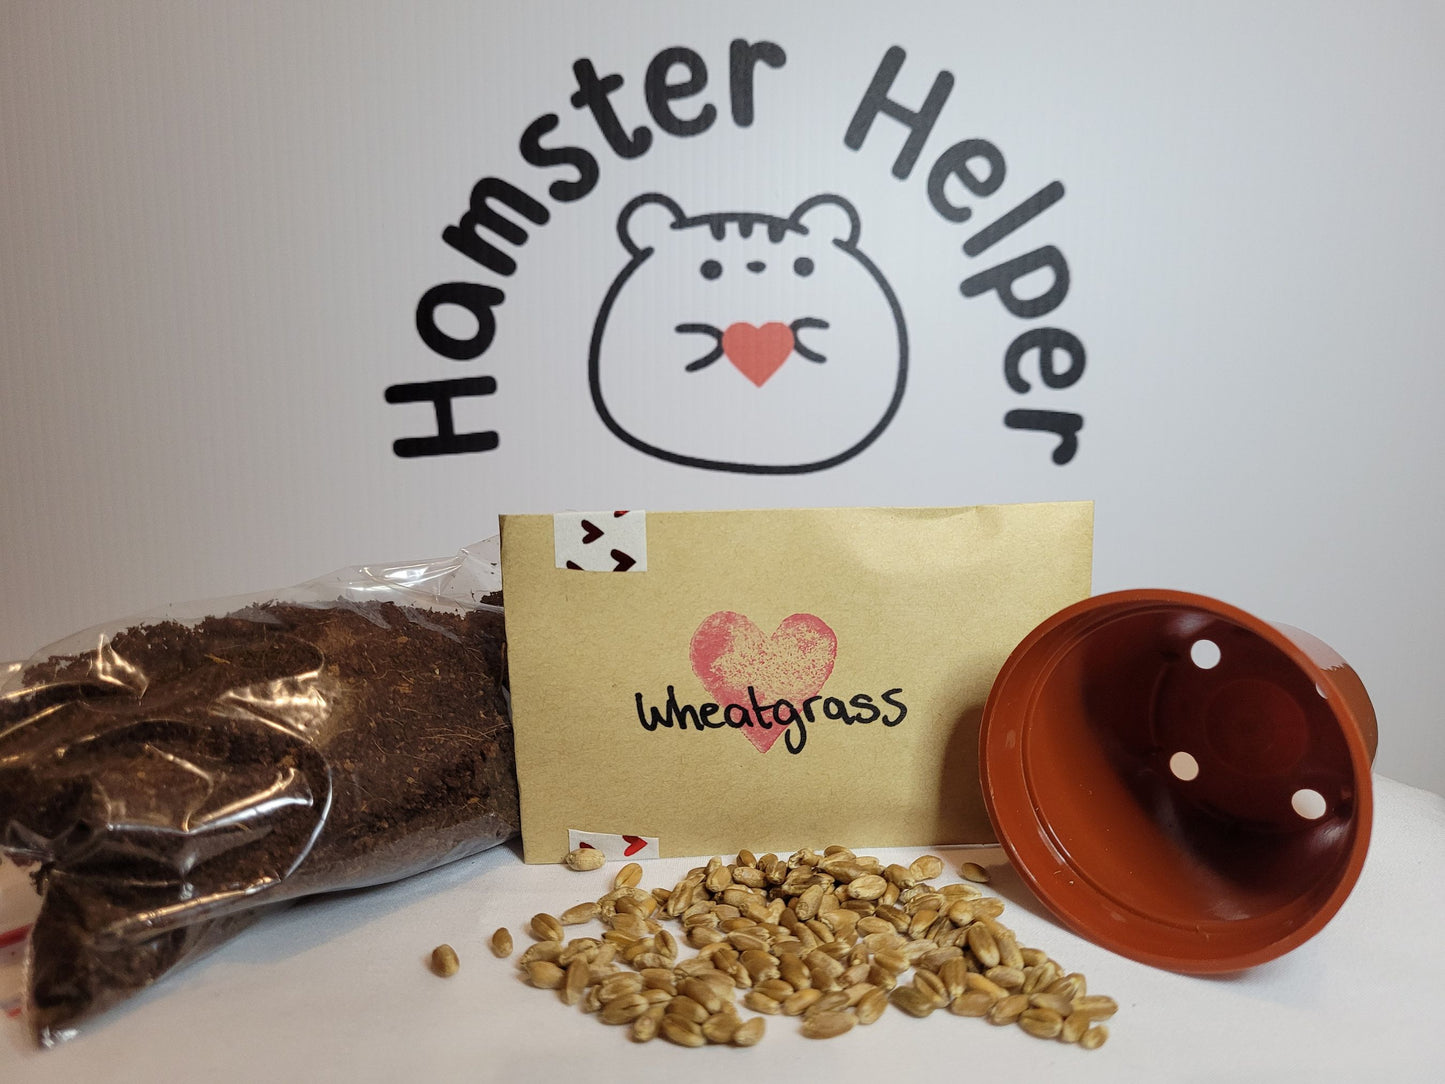 A hamster safe wheatgrass growing kit, containing hamster safe soil, wheatgrass seeds and a plastic plant pot